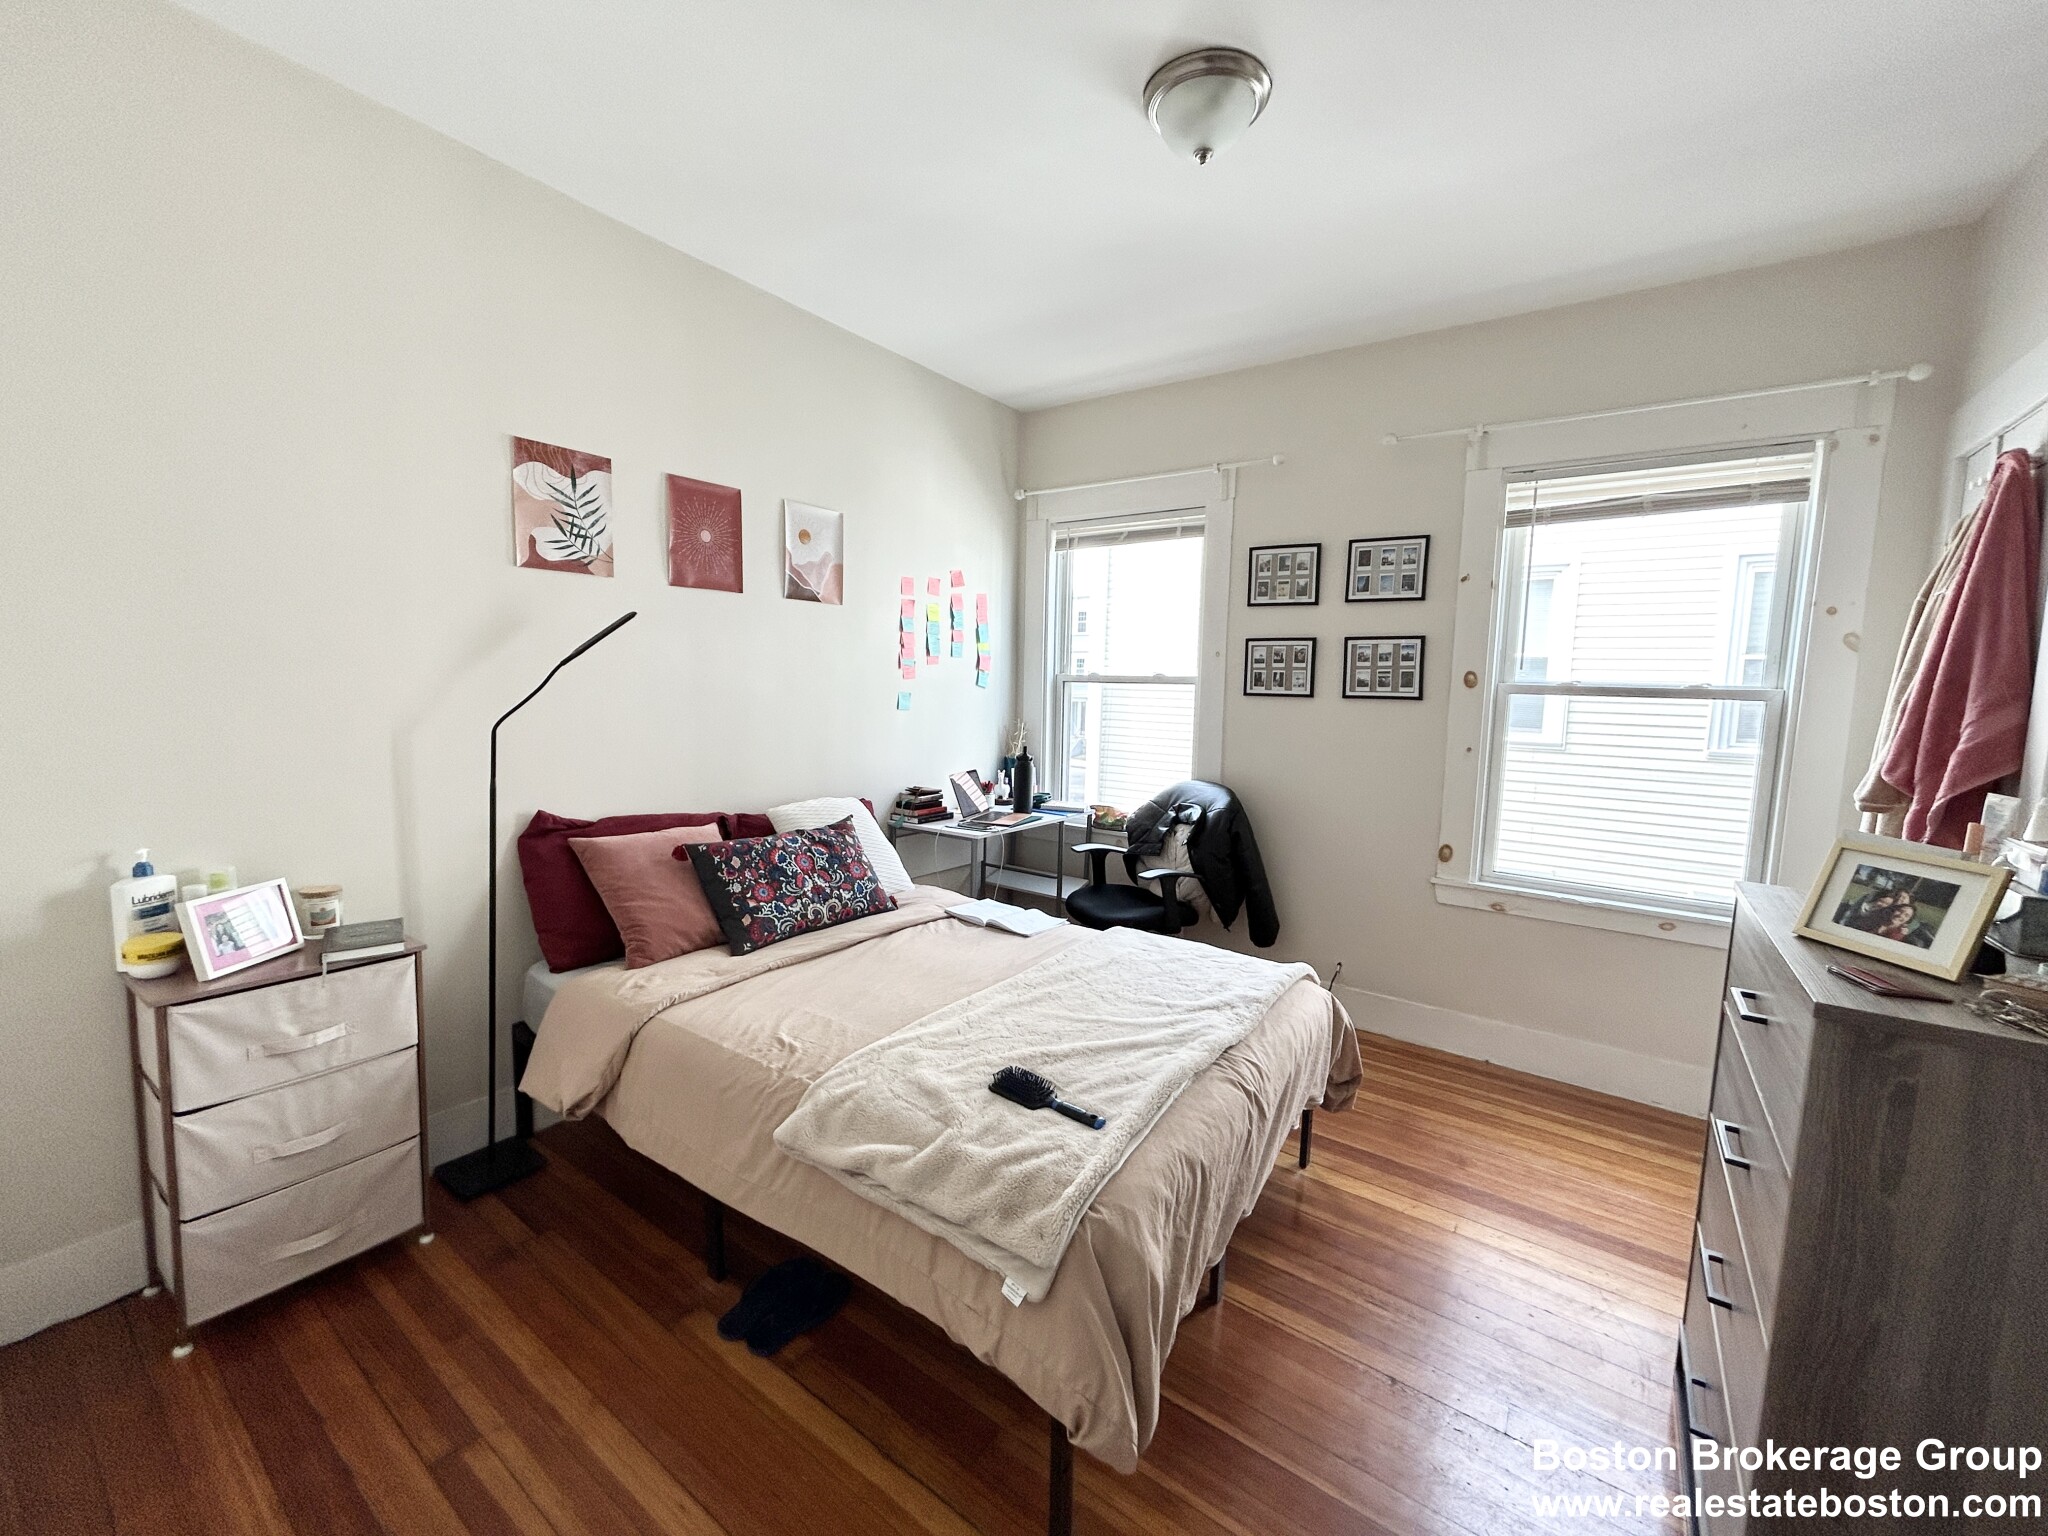 Photos of apartment on Romsey St.,Boston MA 02125